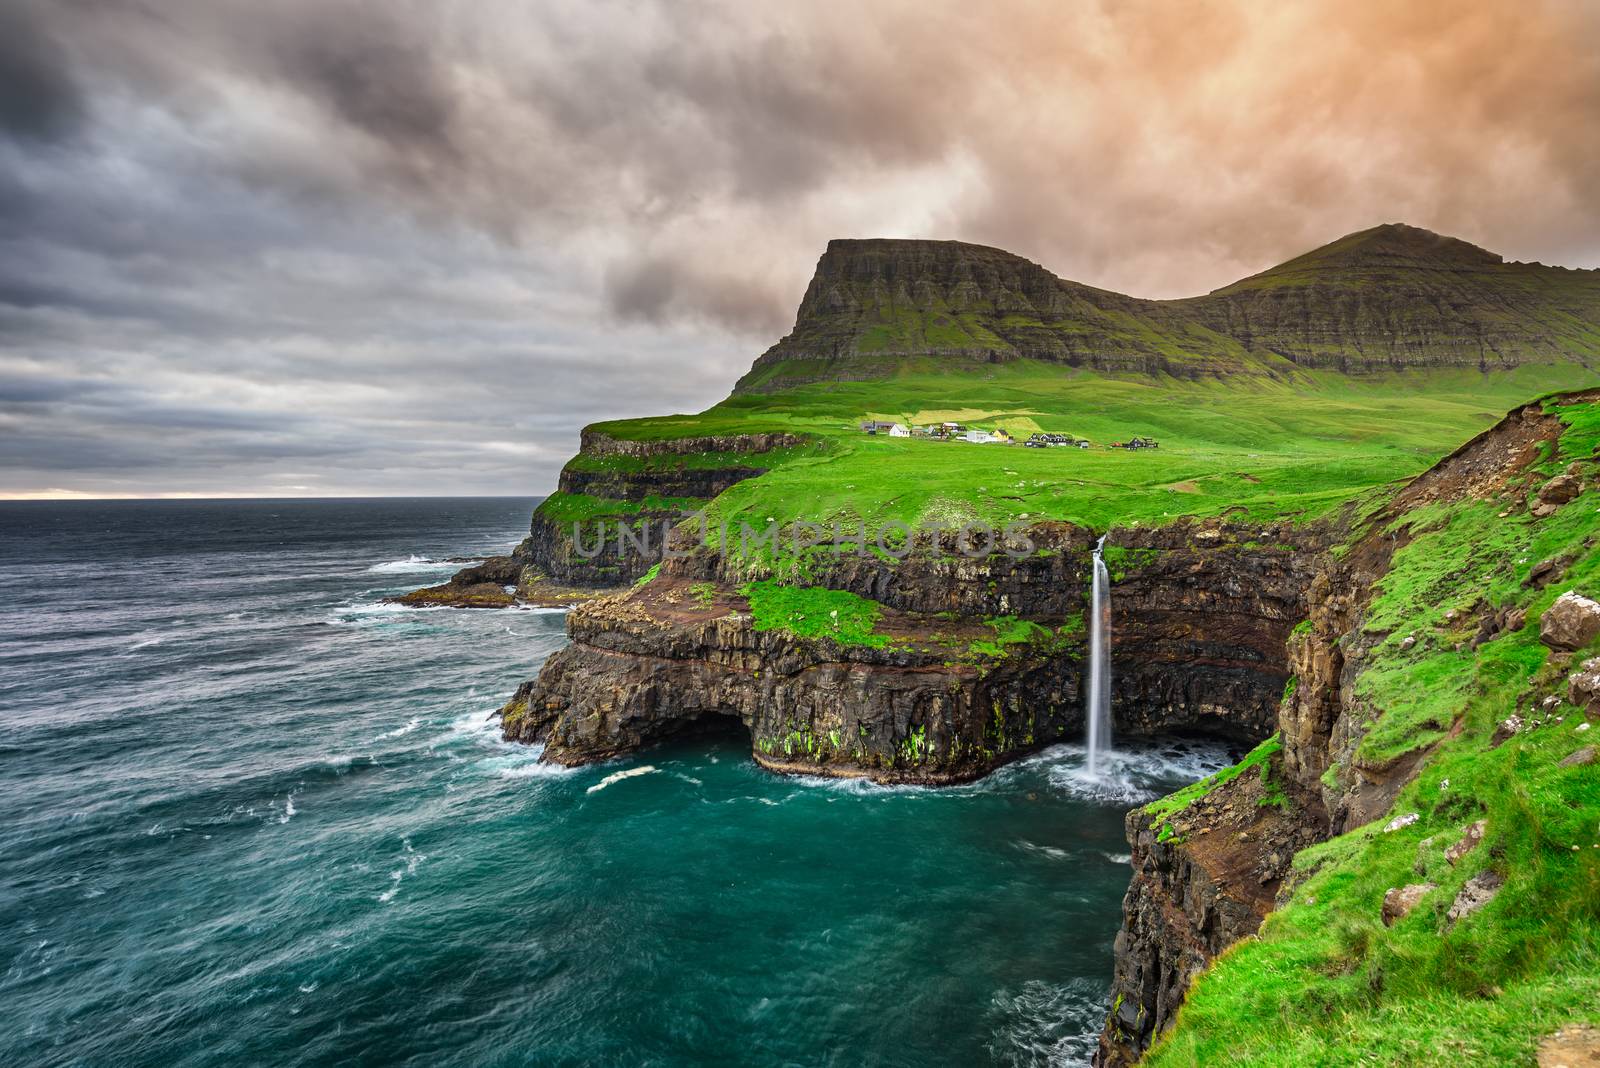 Gasadalur village and its waterfall, Faroe Islands, Denmark by nickfox